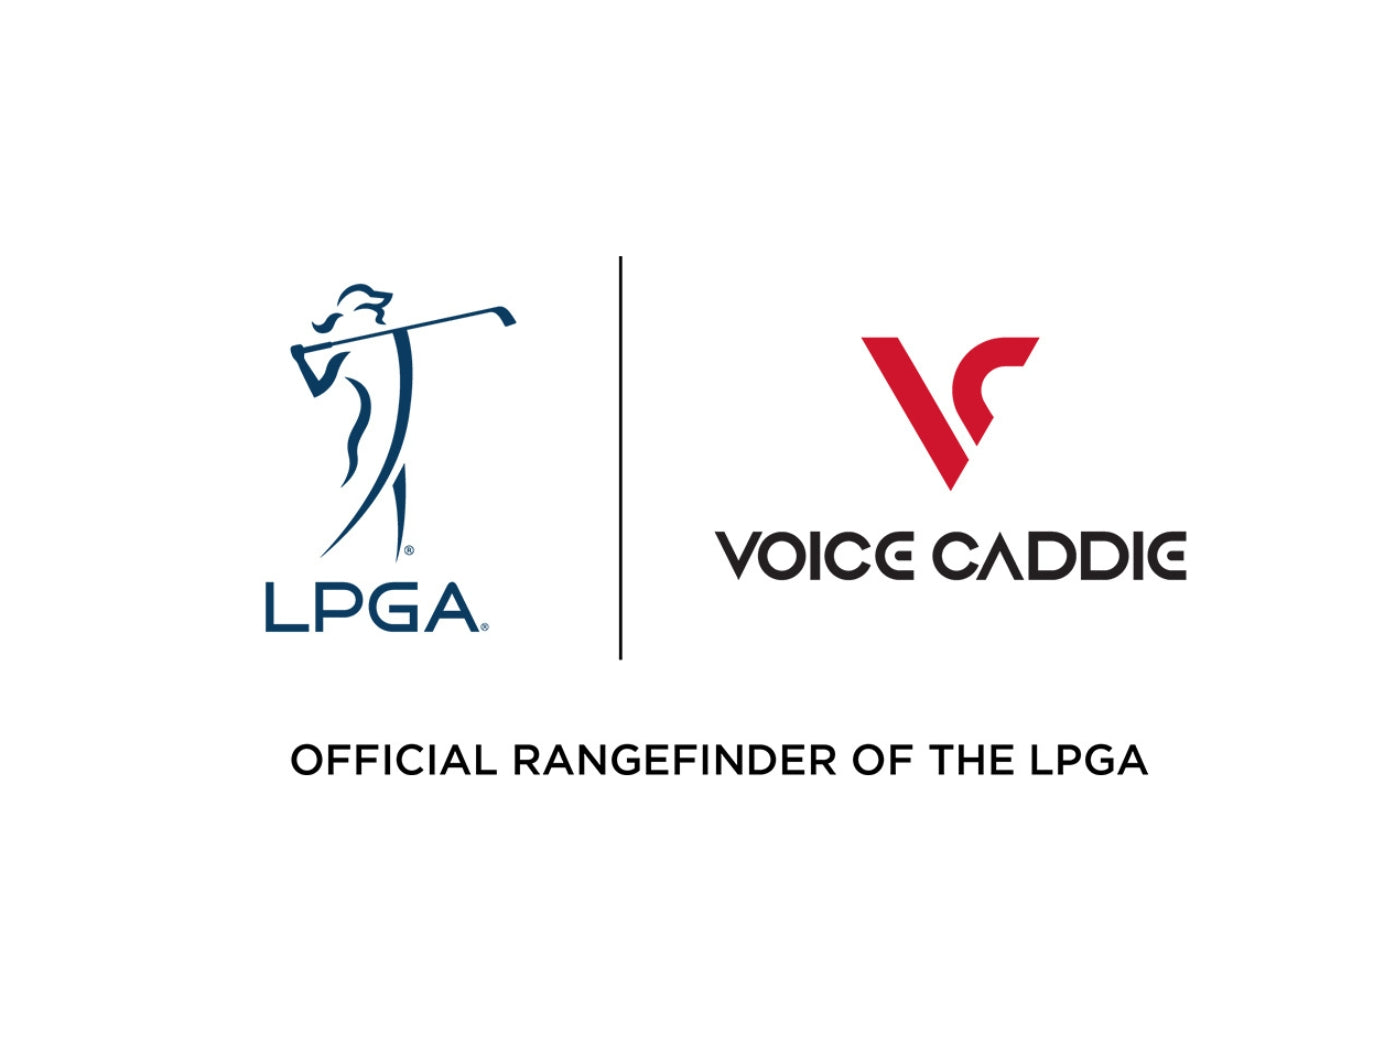 Voice Caddie official rangefinder of the LPGA